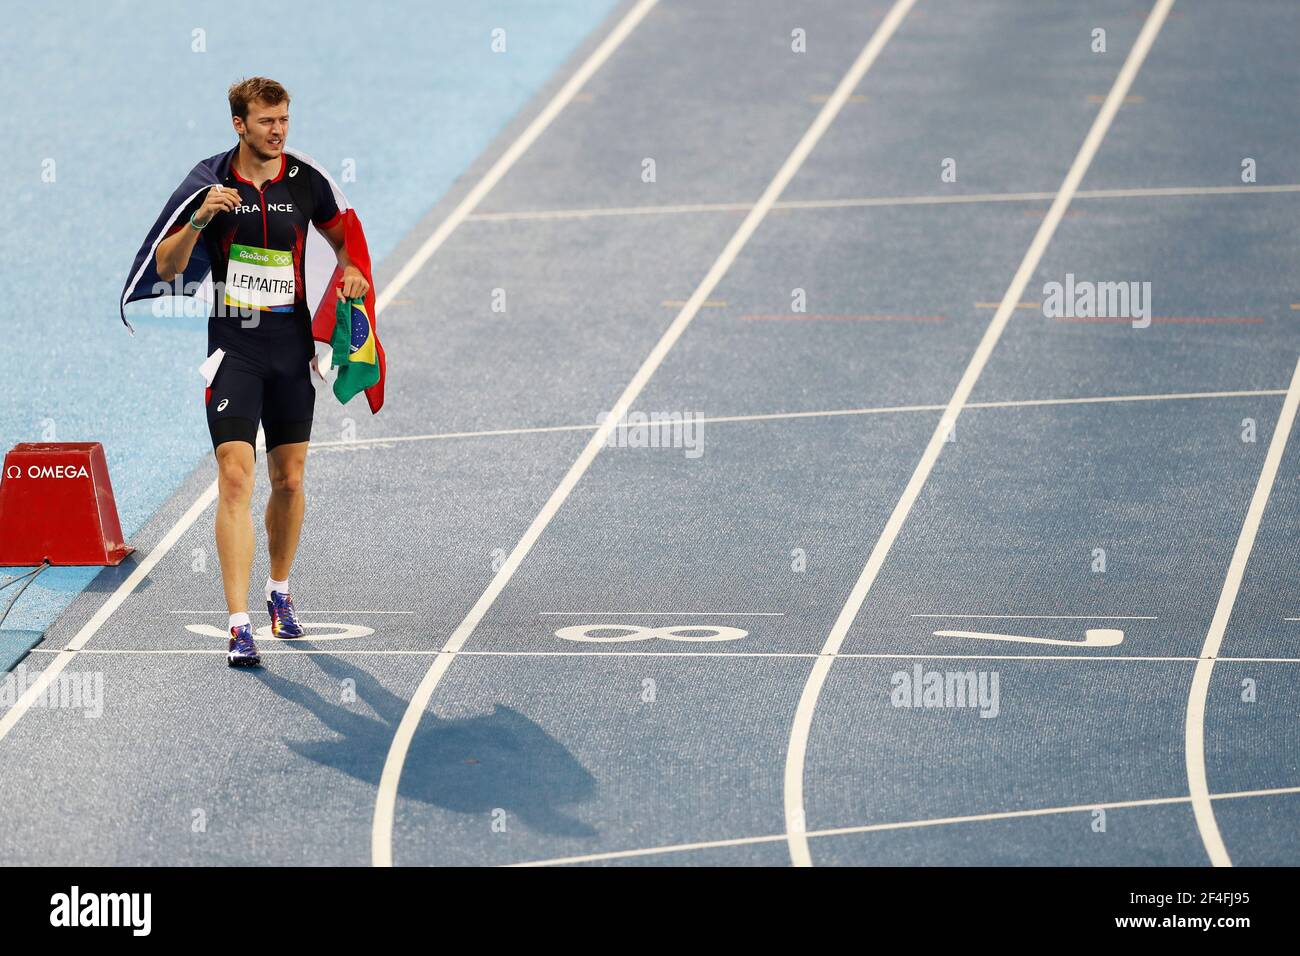 Christophe Lemaitre of France running wins bronze medal 200m sprint race, Rio 2016 Summer Olympic Games. Stock Photo